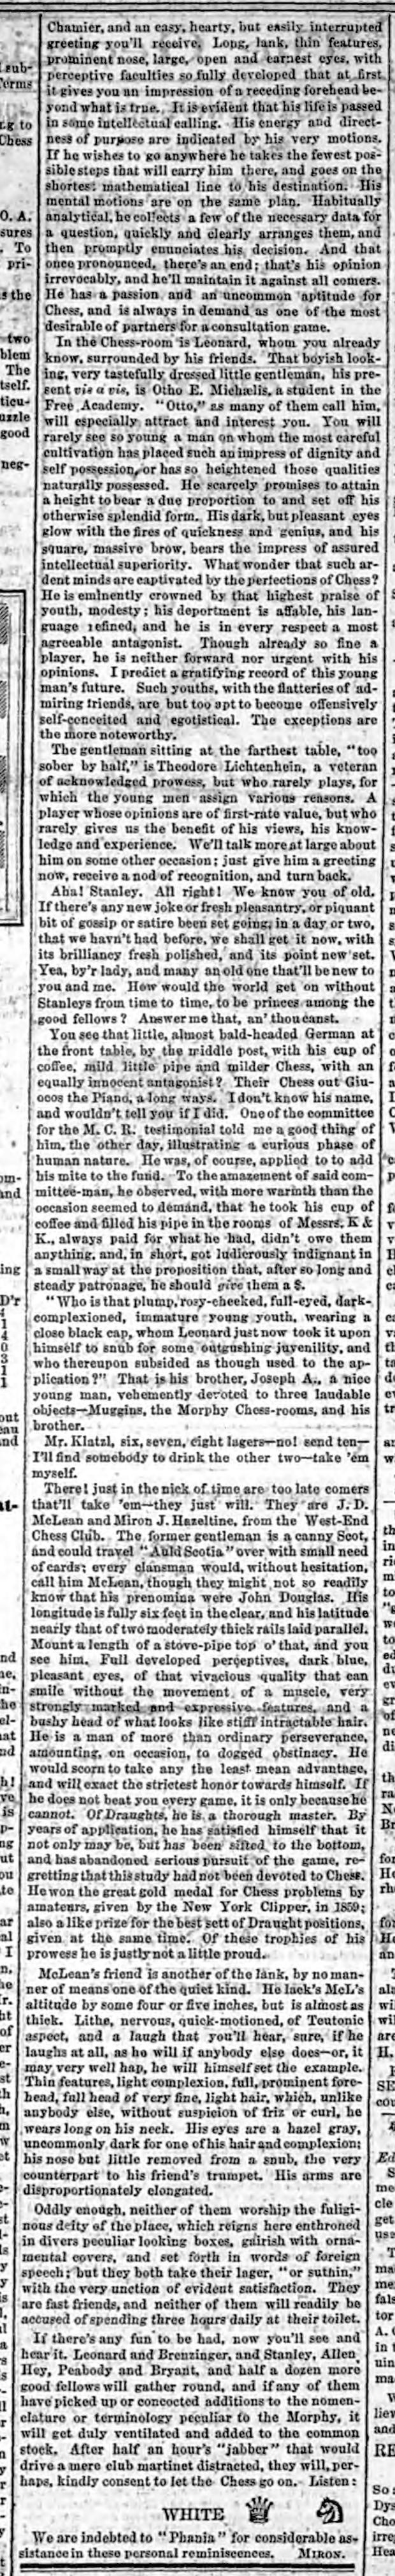 1867.08.16-02 Macon Georgia Weekly Telegraph.jpg